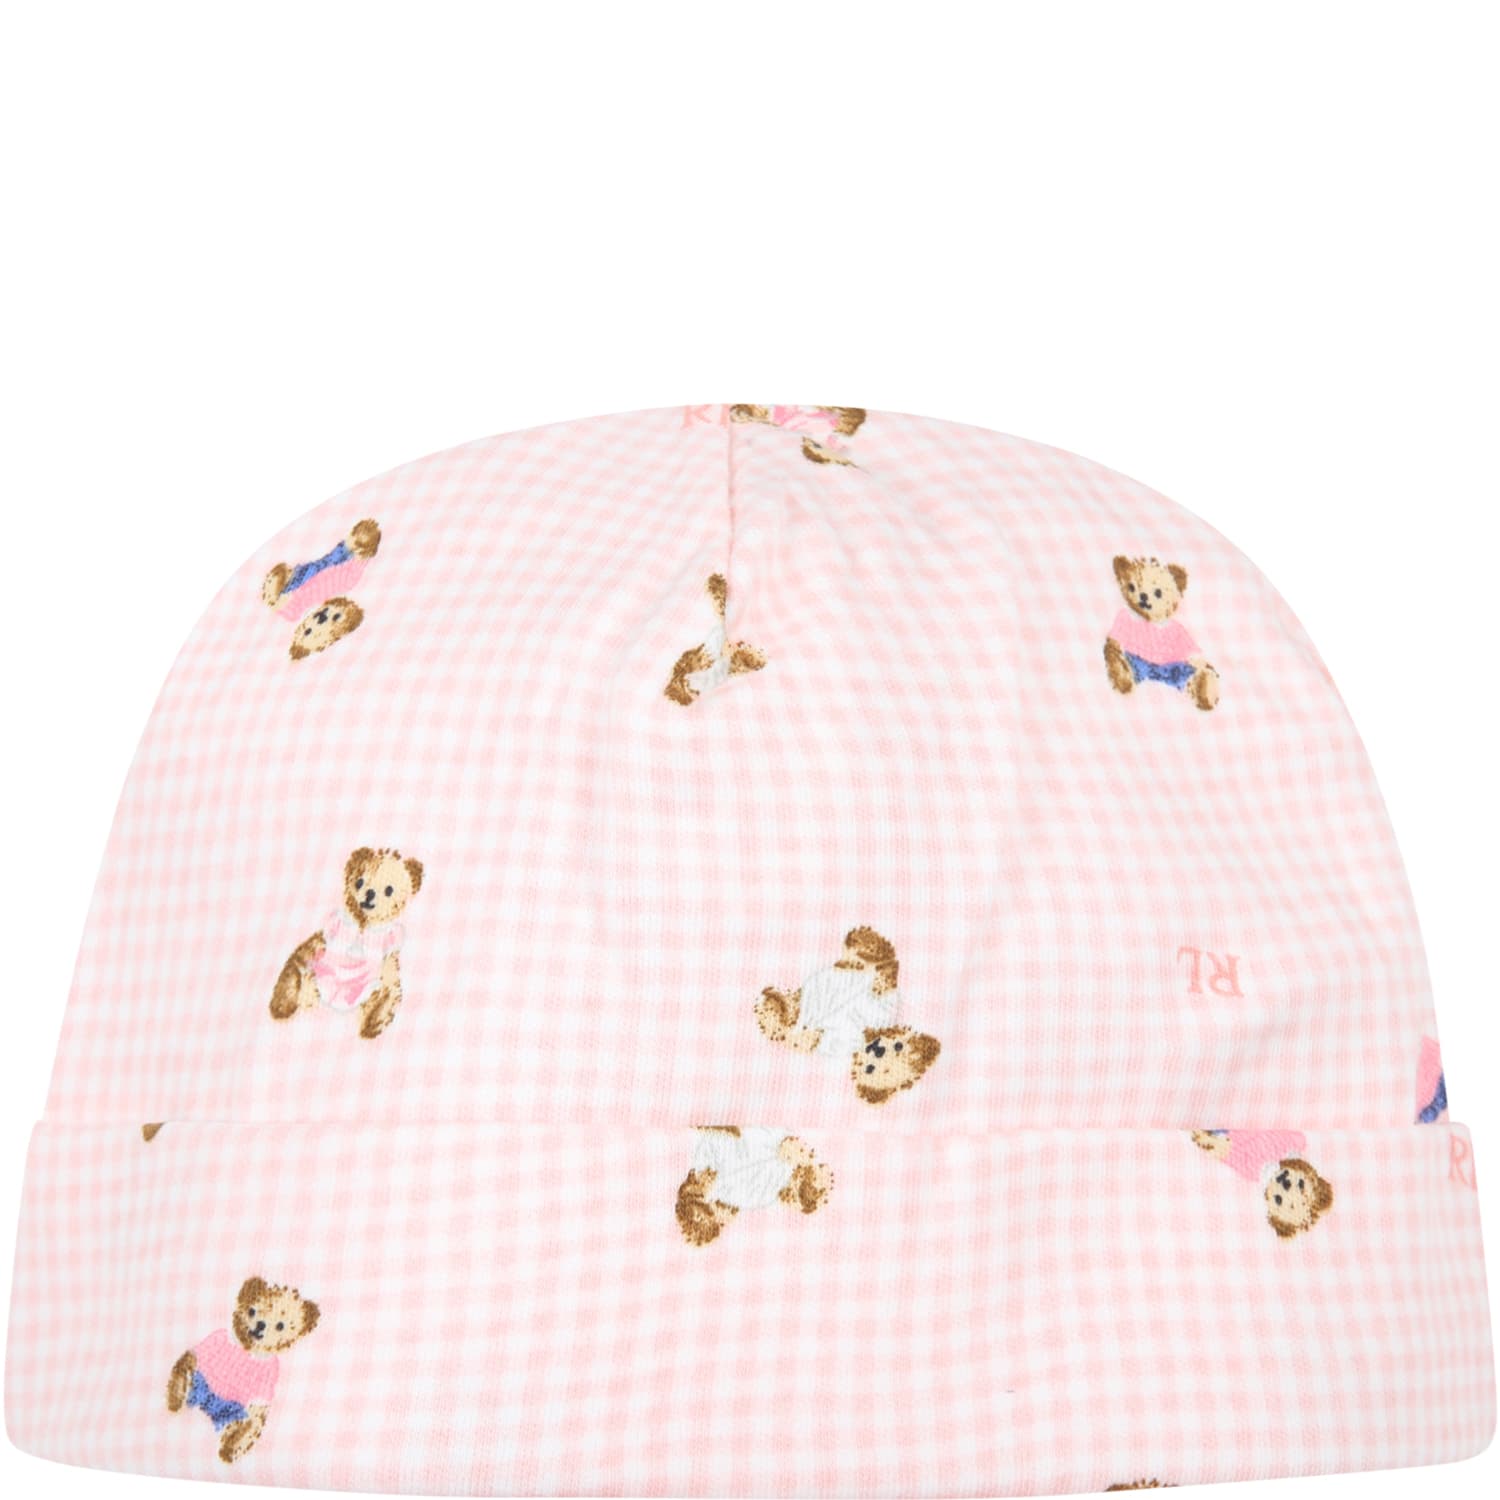 Ralph Lauren Multicolor Hat For Baby Girl With Bears